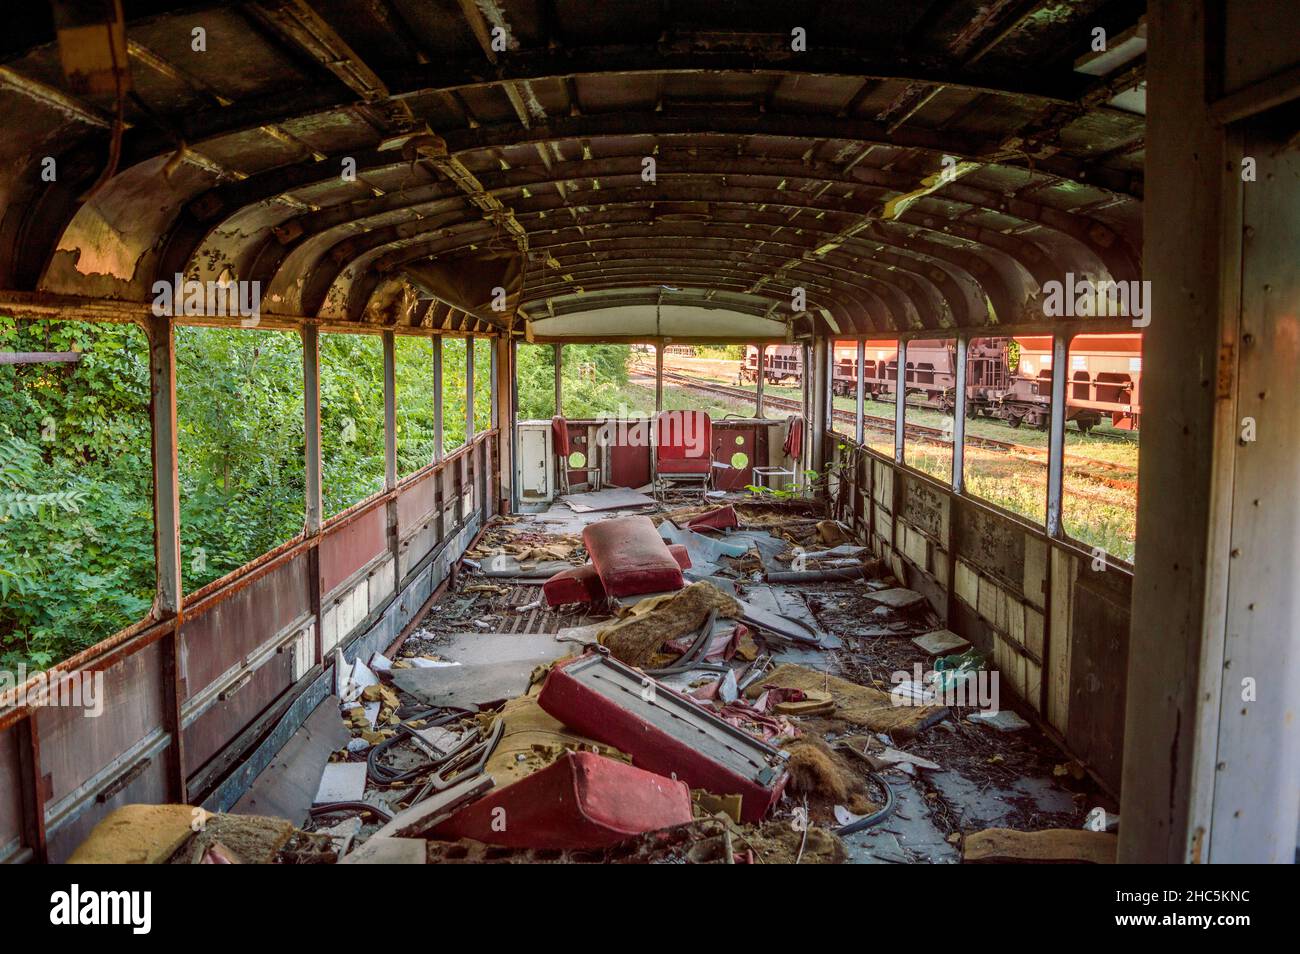 Demolished interior of abandoned rail bus wagon Stock Photo